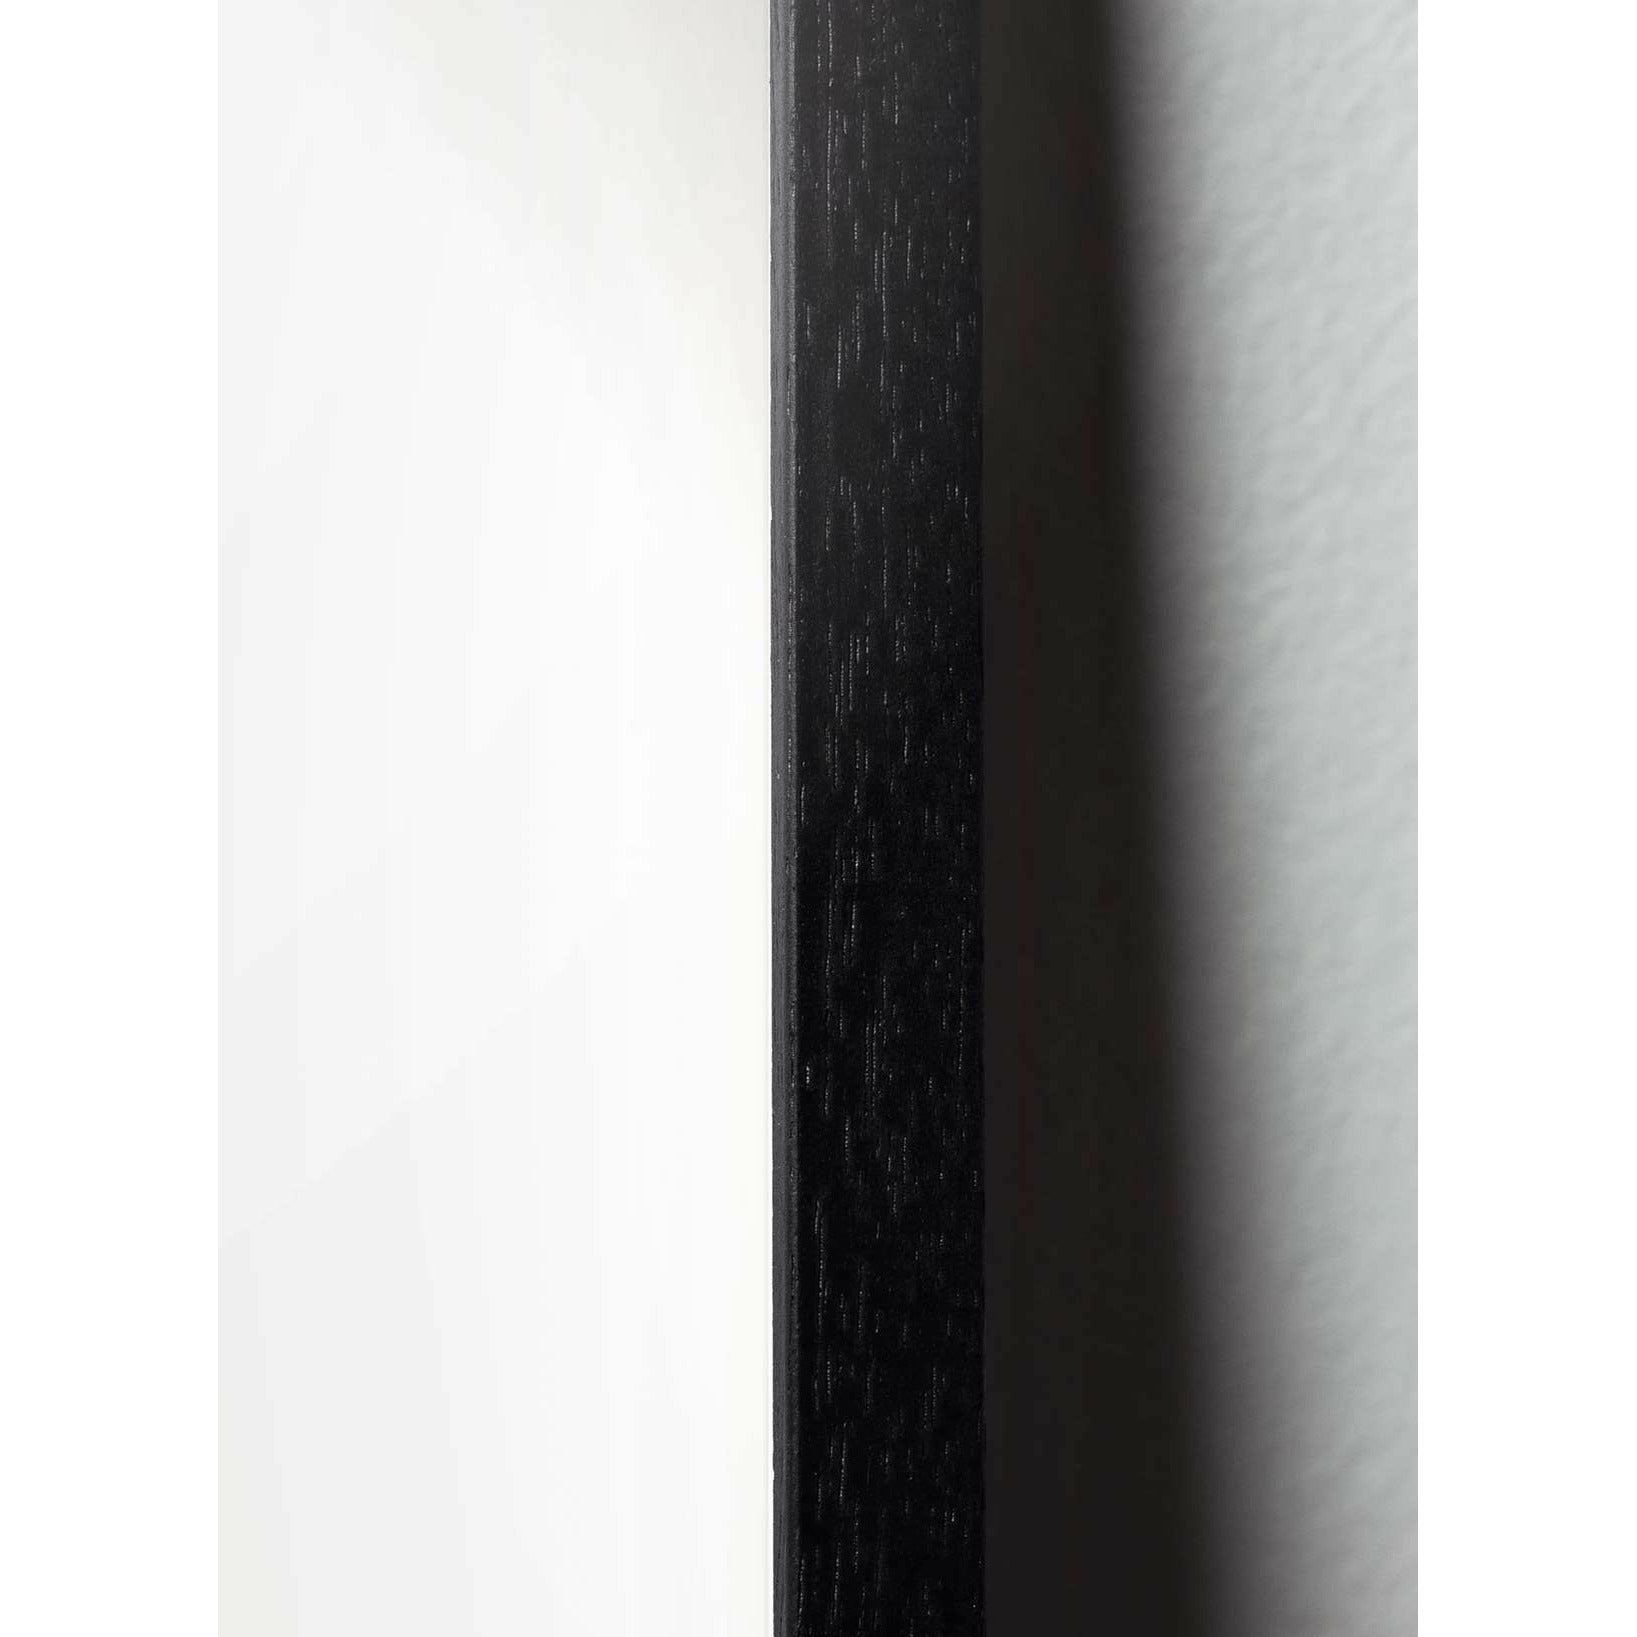 Póster de línea de caída de ideas, marco en madera lacada negra 30x40 cm, fondo blanco